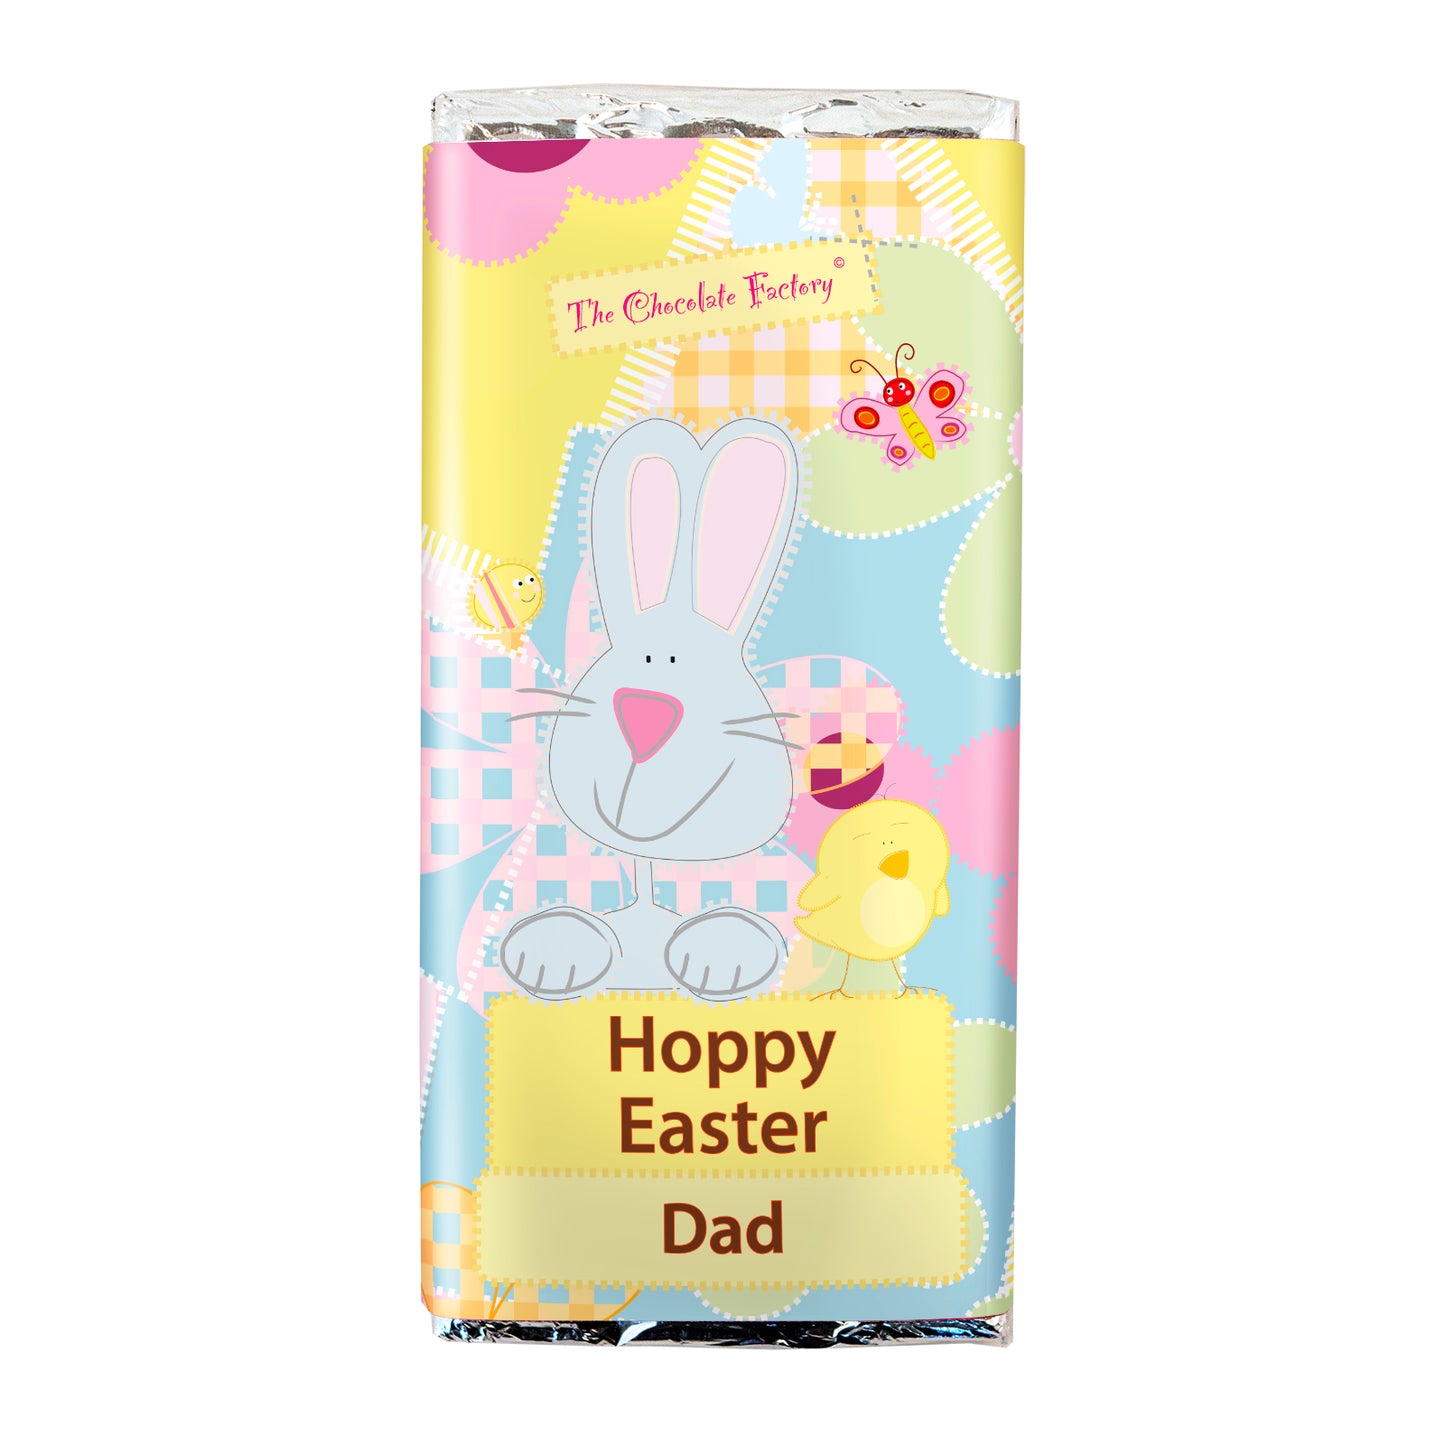 Hoppy Easter Dad Chocolate Bar